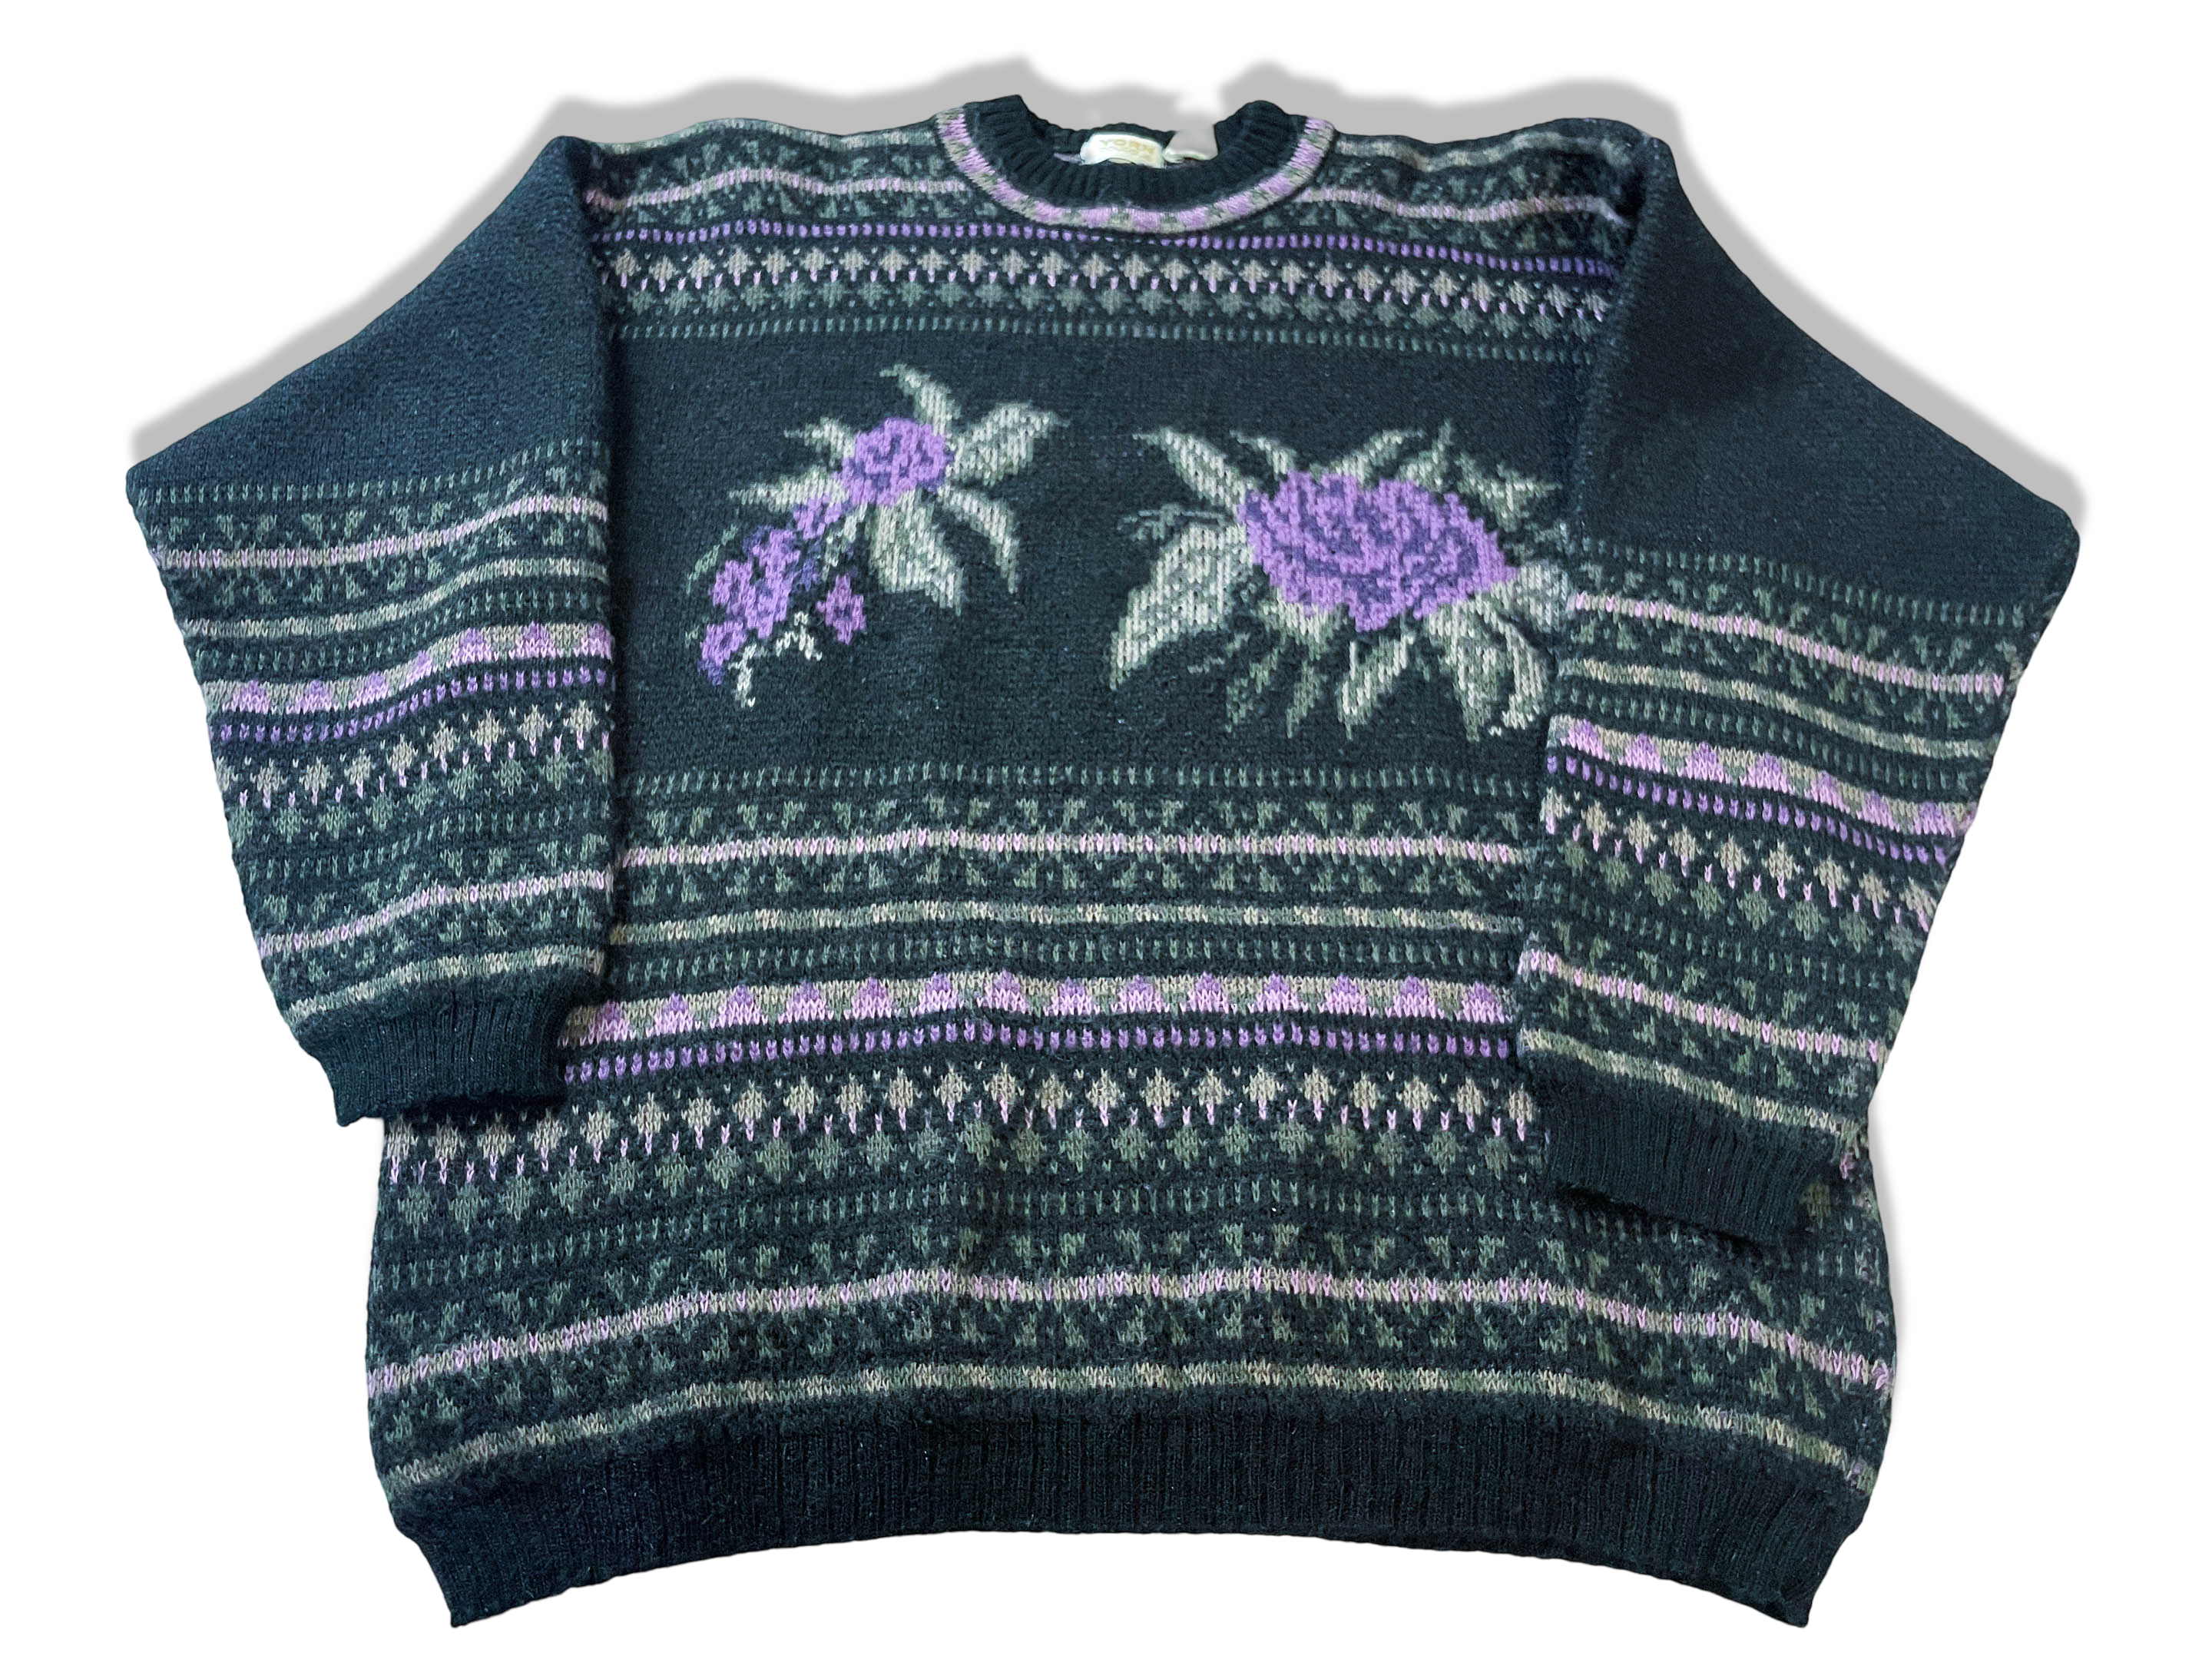 Vintage Yorn Navy blue women's floral geometric pattern knitted sweater in M|L26 W20| SKU 3995